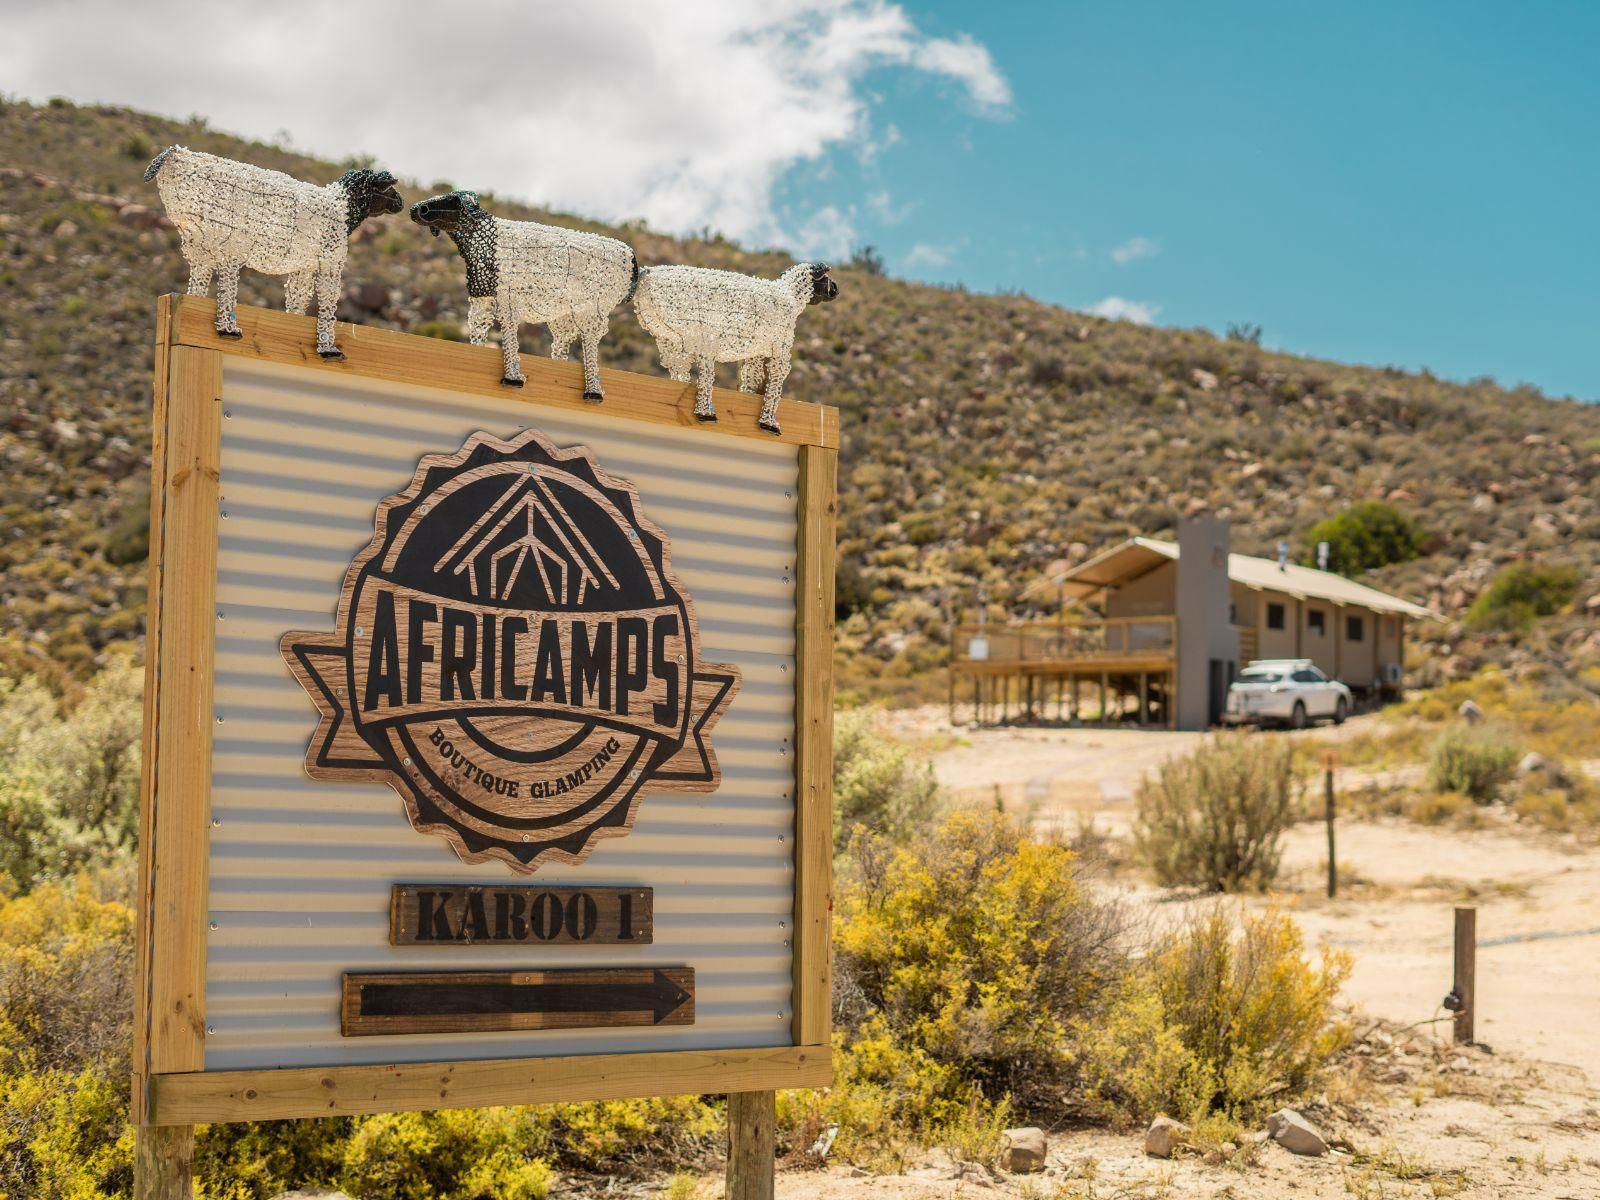 Africamps At Karoo 1 De Doorns Western Cape South Africa Sign